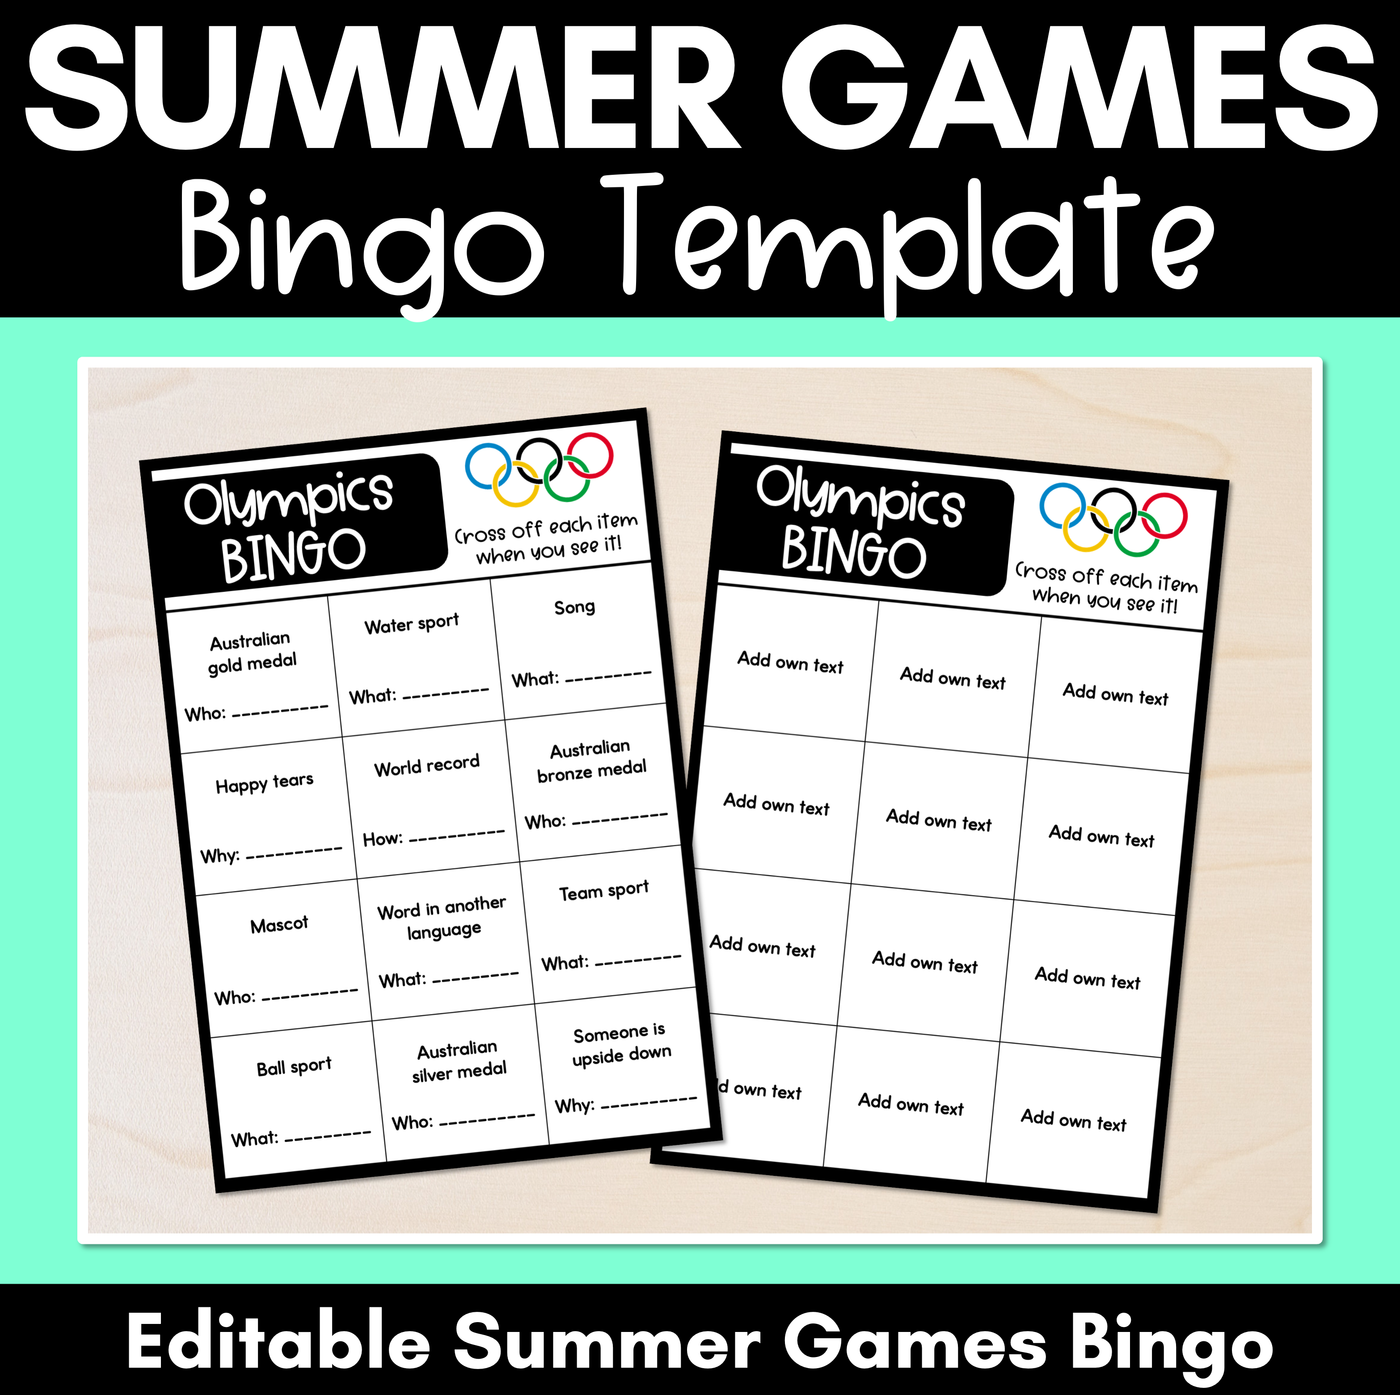 Summer Games Bingo Template - Editable Summer Games Bingo for kids